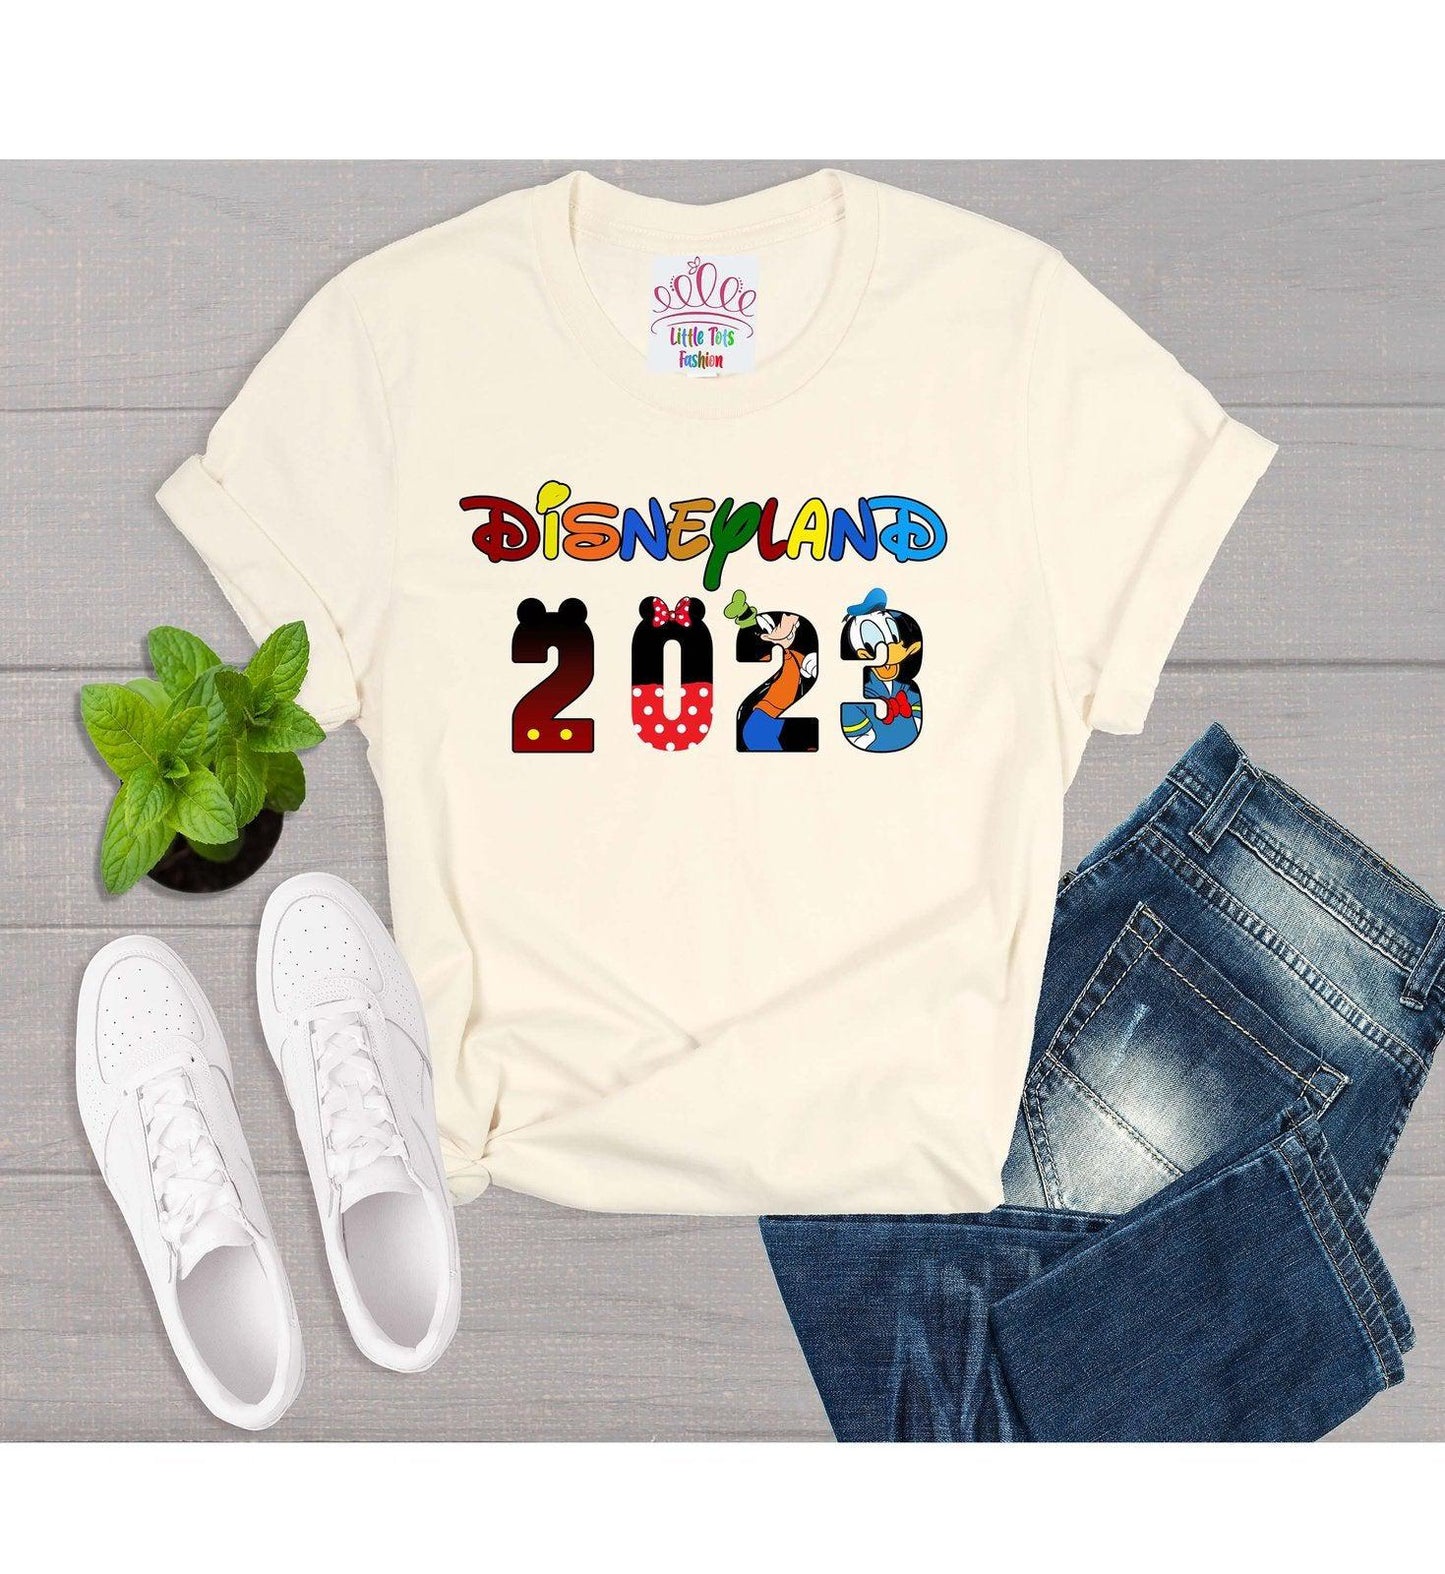 trips 2023 |   Trip |   Shirt | Girls   Shirt | Girls shirts | Girls family vacation shirt